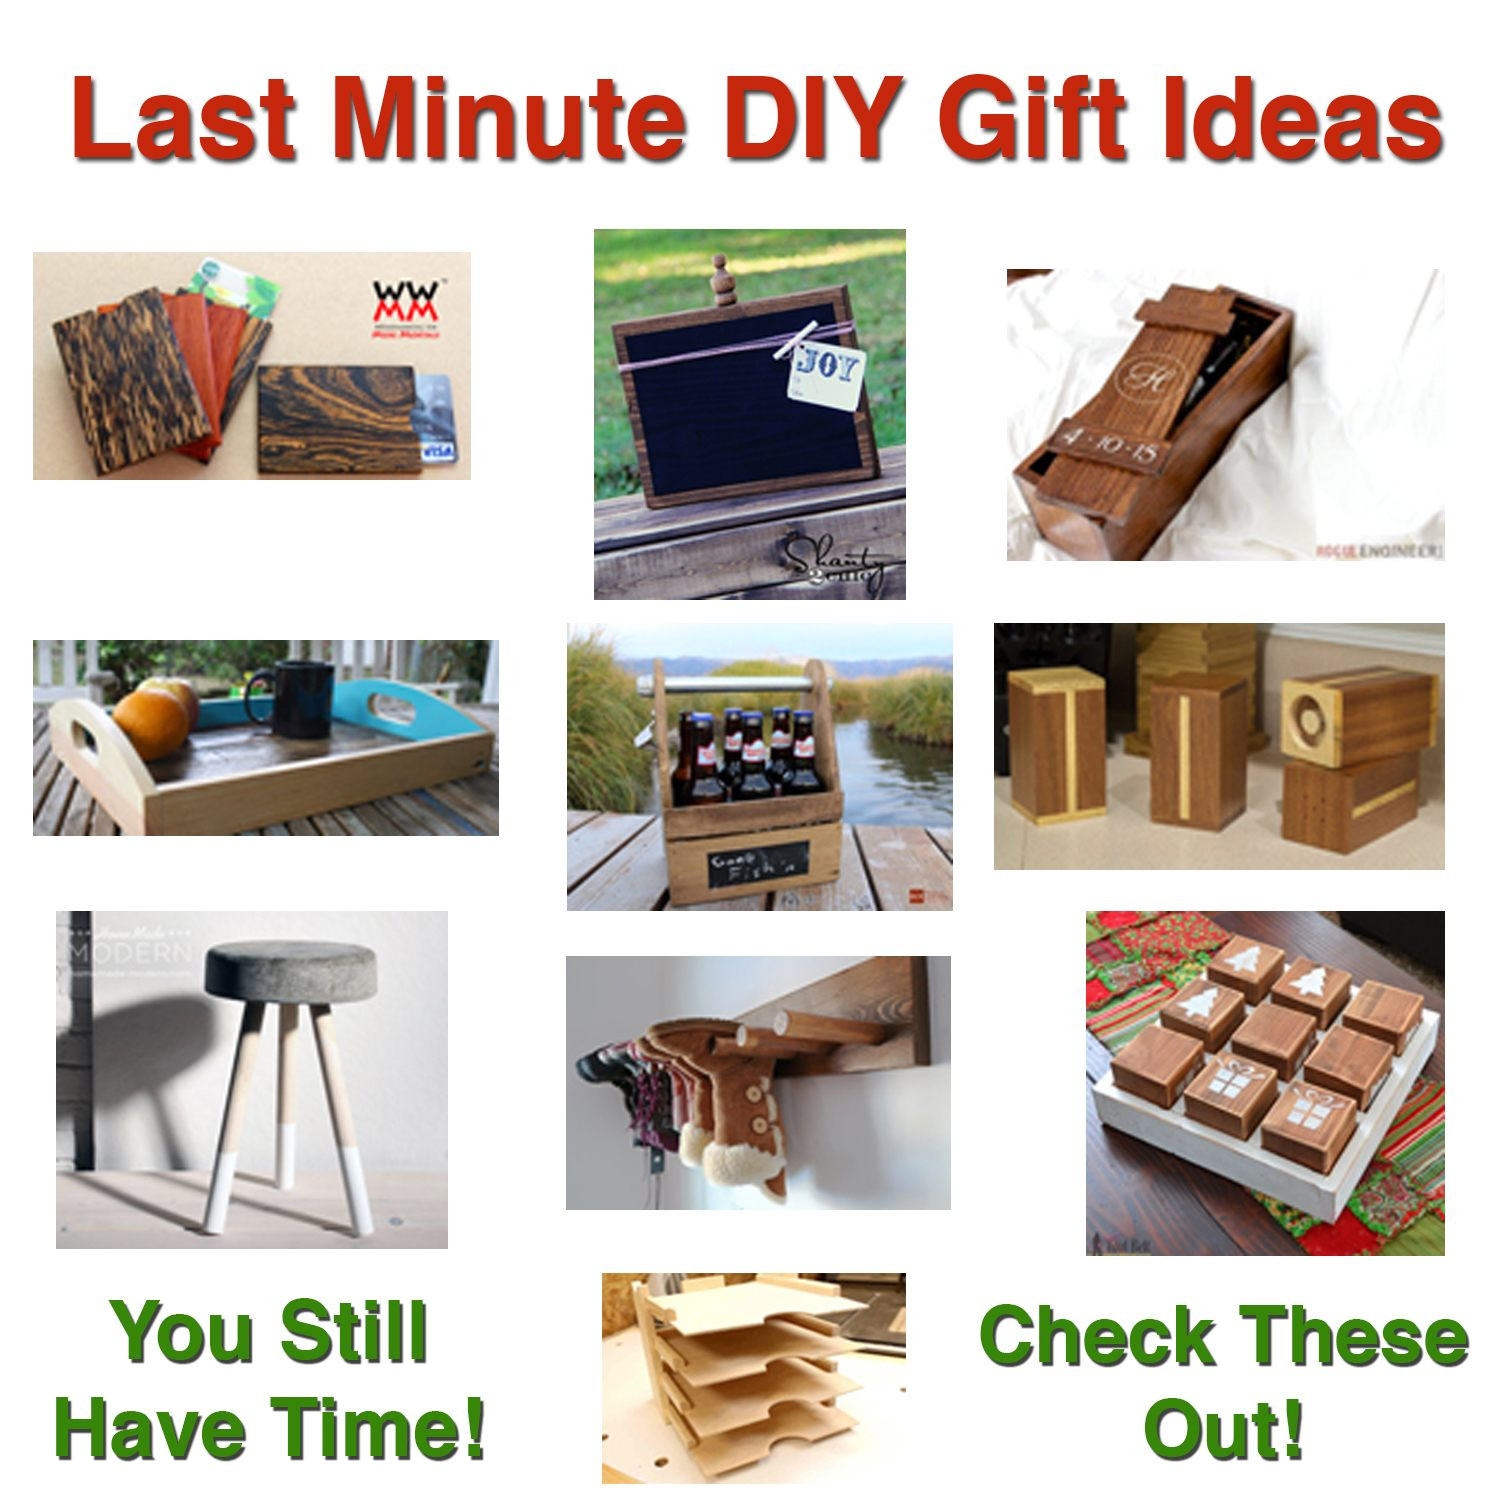 Last Minute DIY Gift Ideas
 Last Minute DIY Gift Ideas Top DIY Bloggers